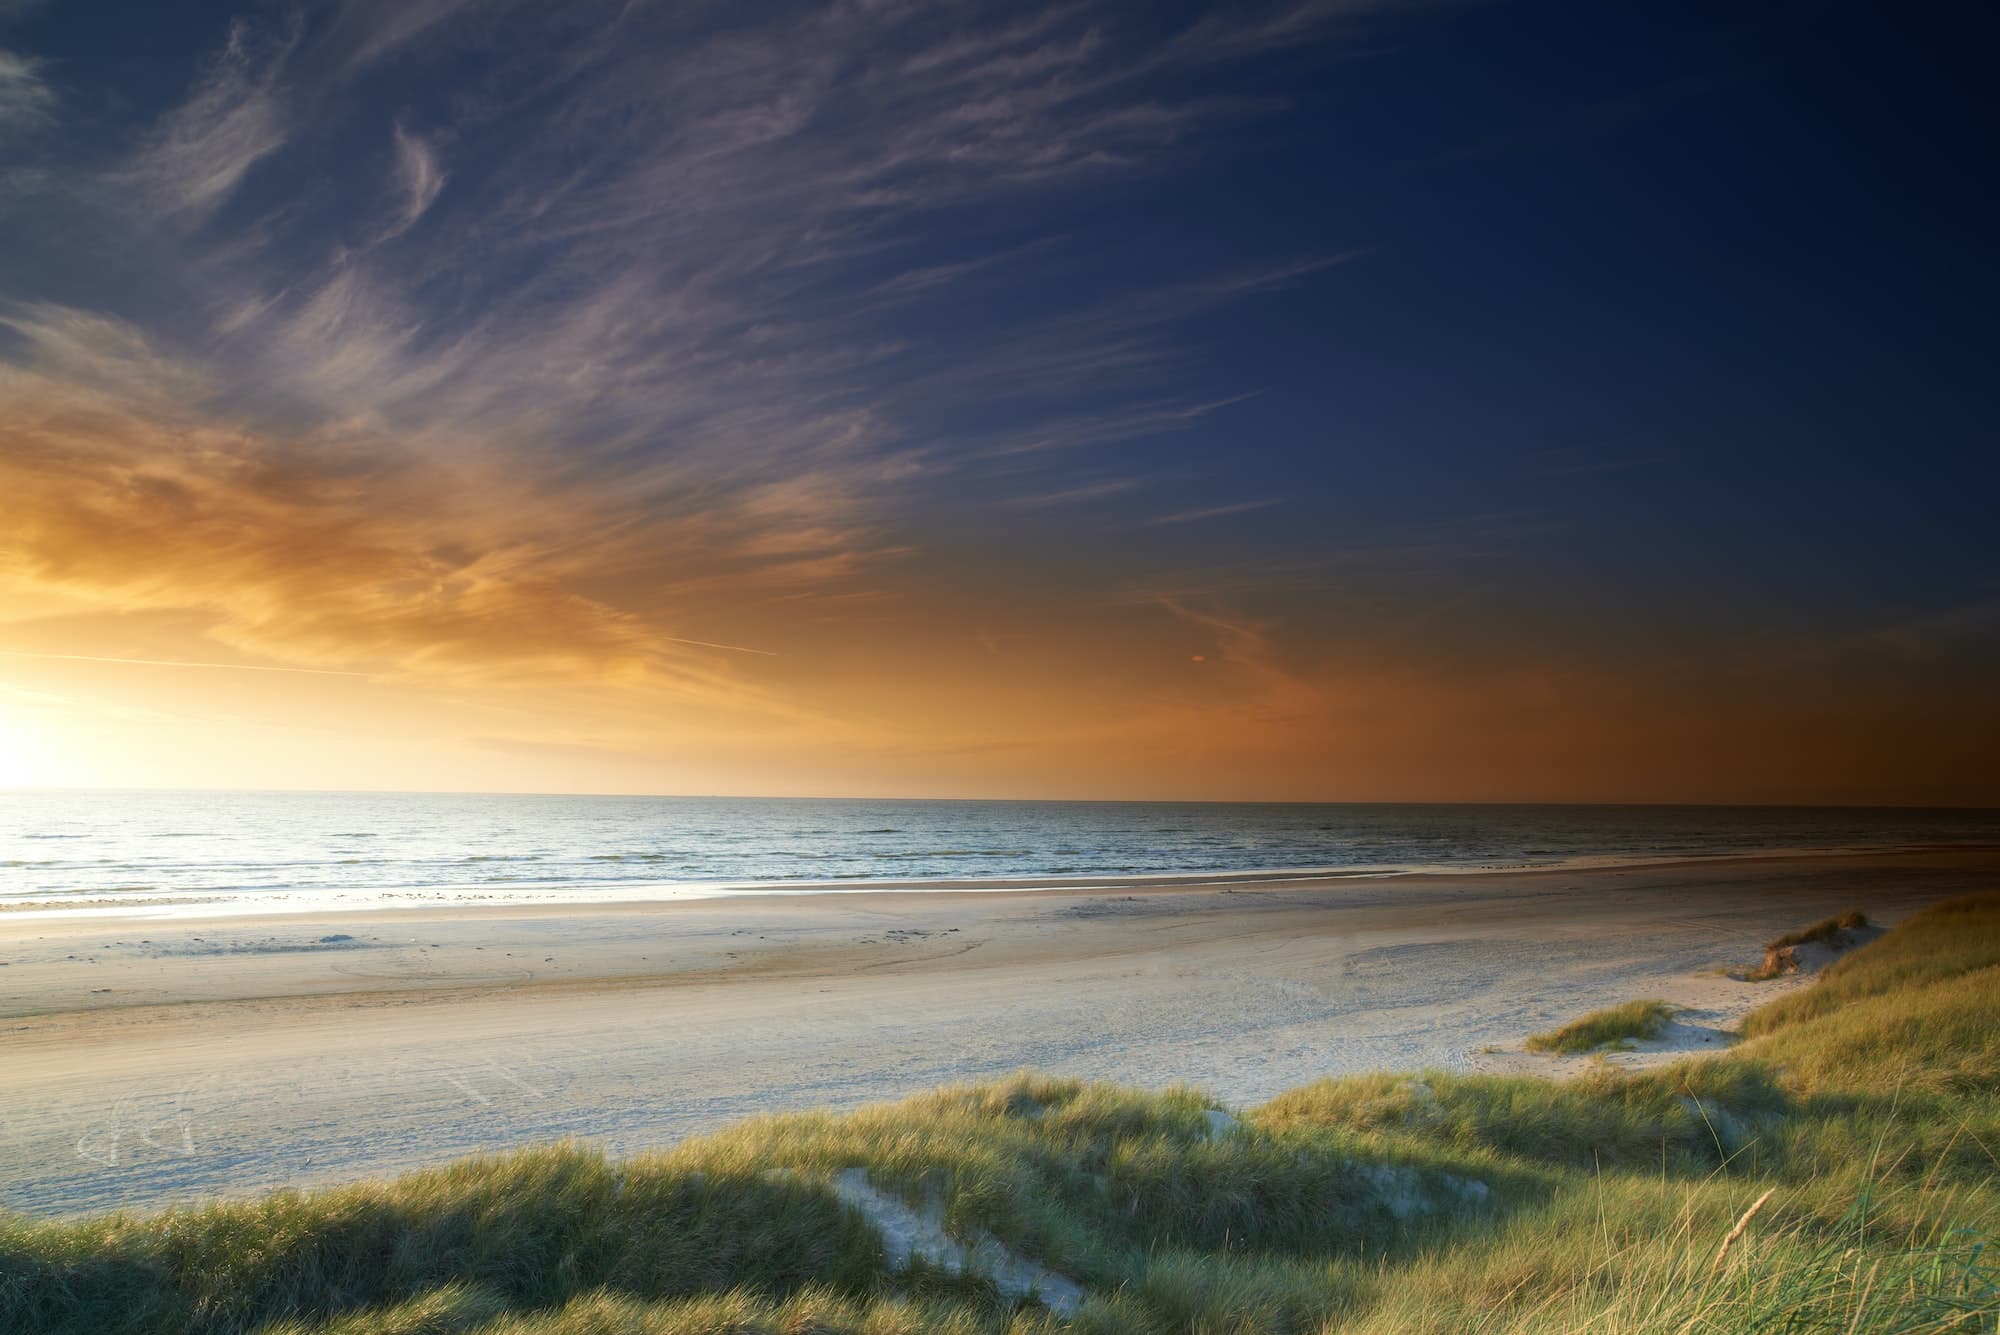 A photo of sunset at the coastline of Jutland, Denmark